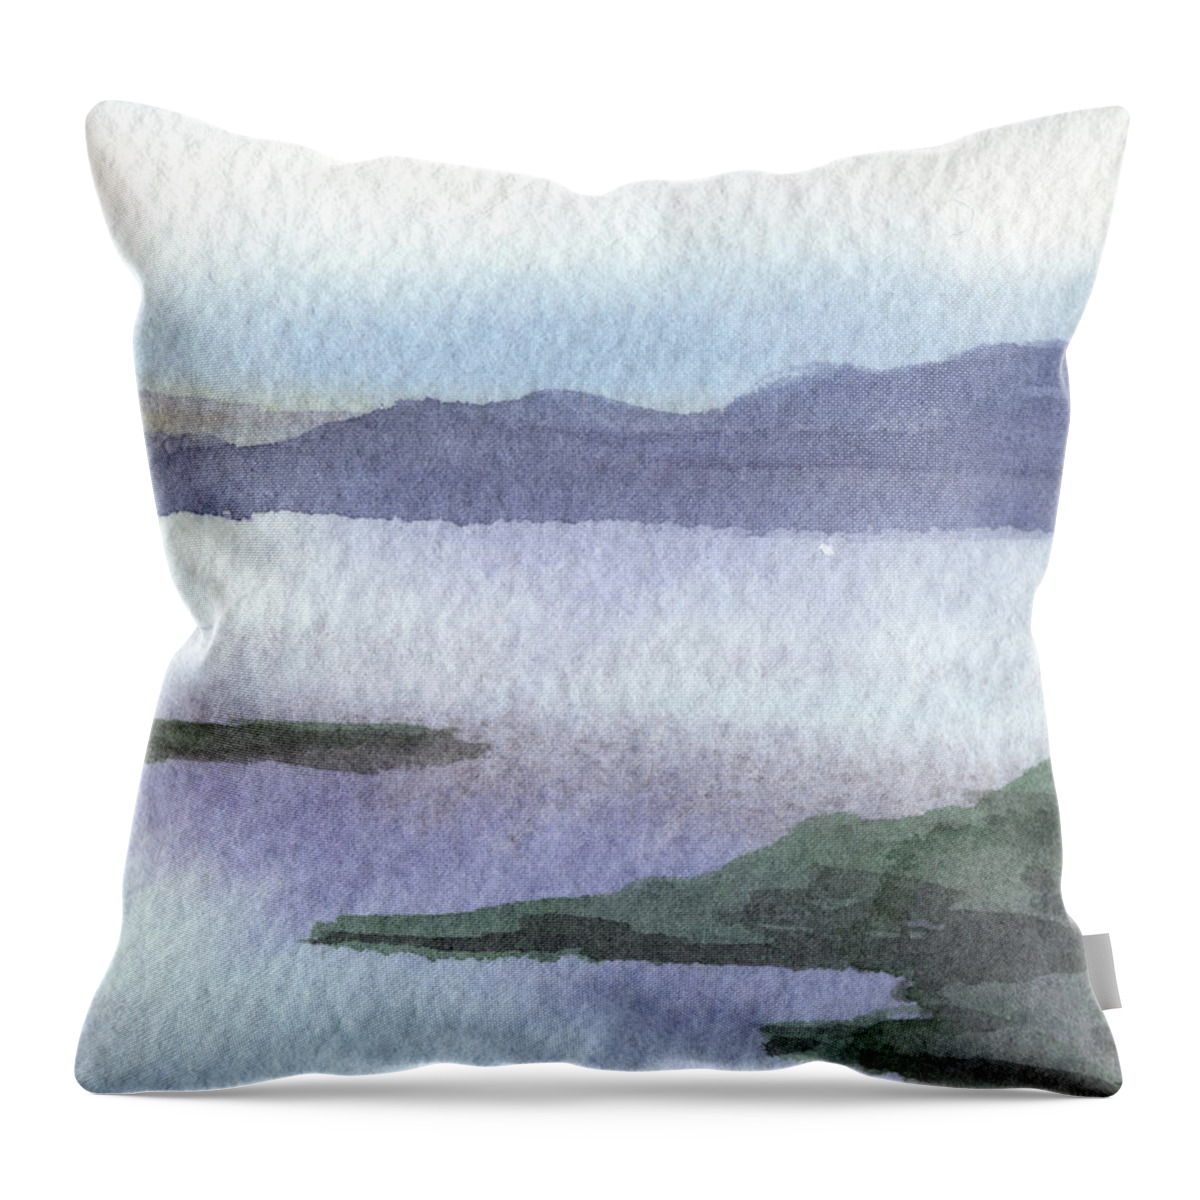 Calm Throw Pillow featuring the painting Calm Dreamy Landscape Peaceful Lake Shore Quiet Meditative Nature II by Irina Sztukowski